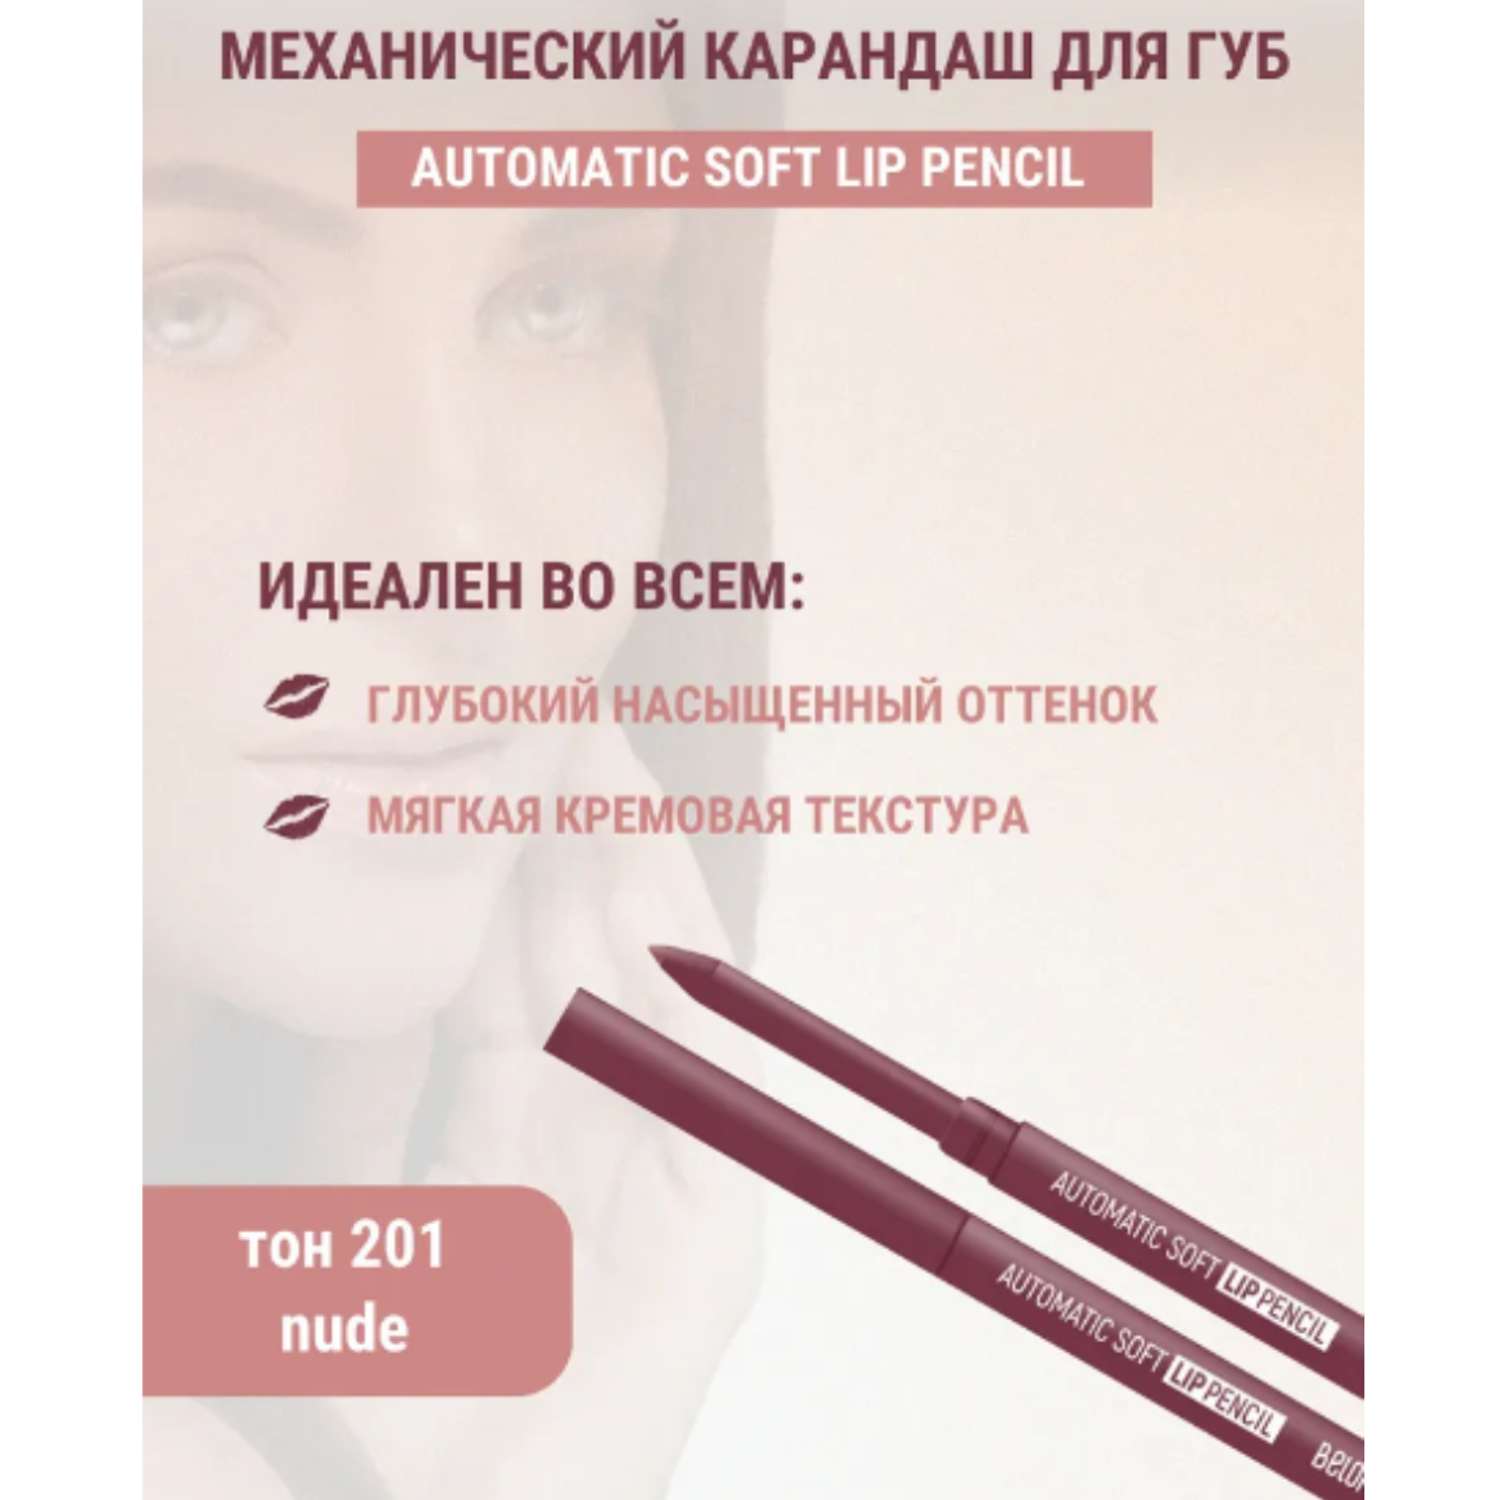 Карандаш для губ Belor Design механический automatic soft lippencil тон201 nude - фото 6